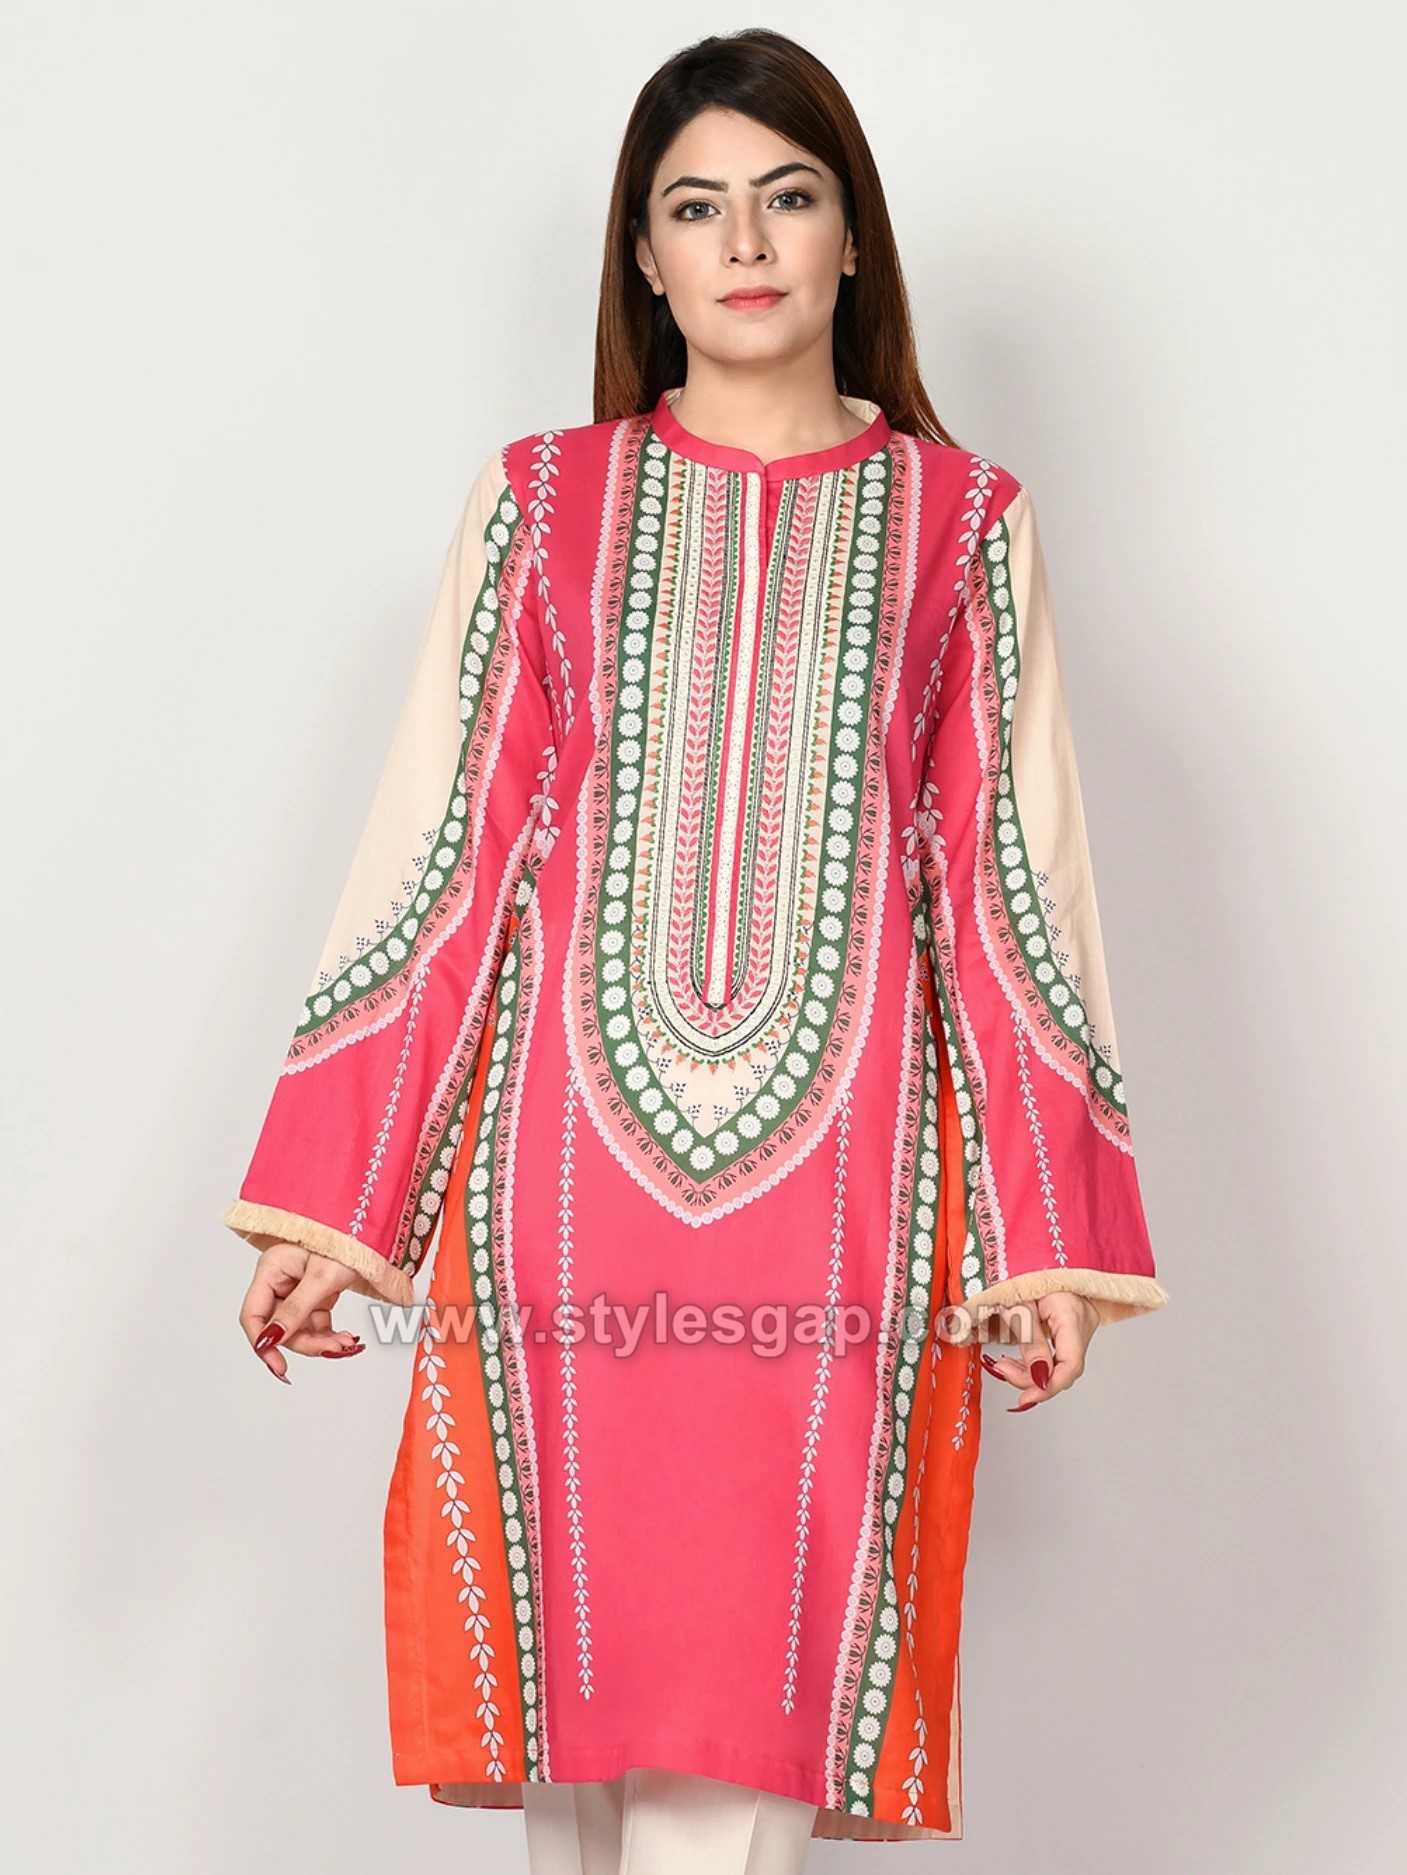 Aggregate more than 89 long kurti stitching design best - thtantai2